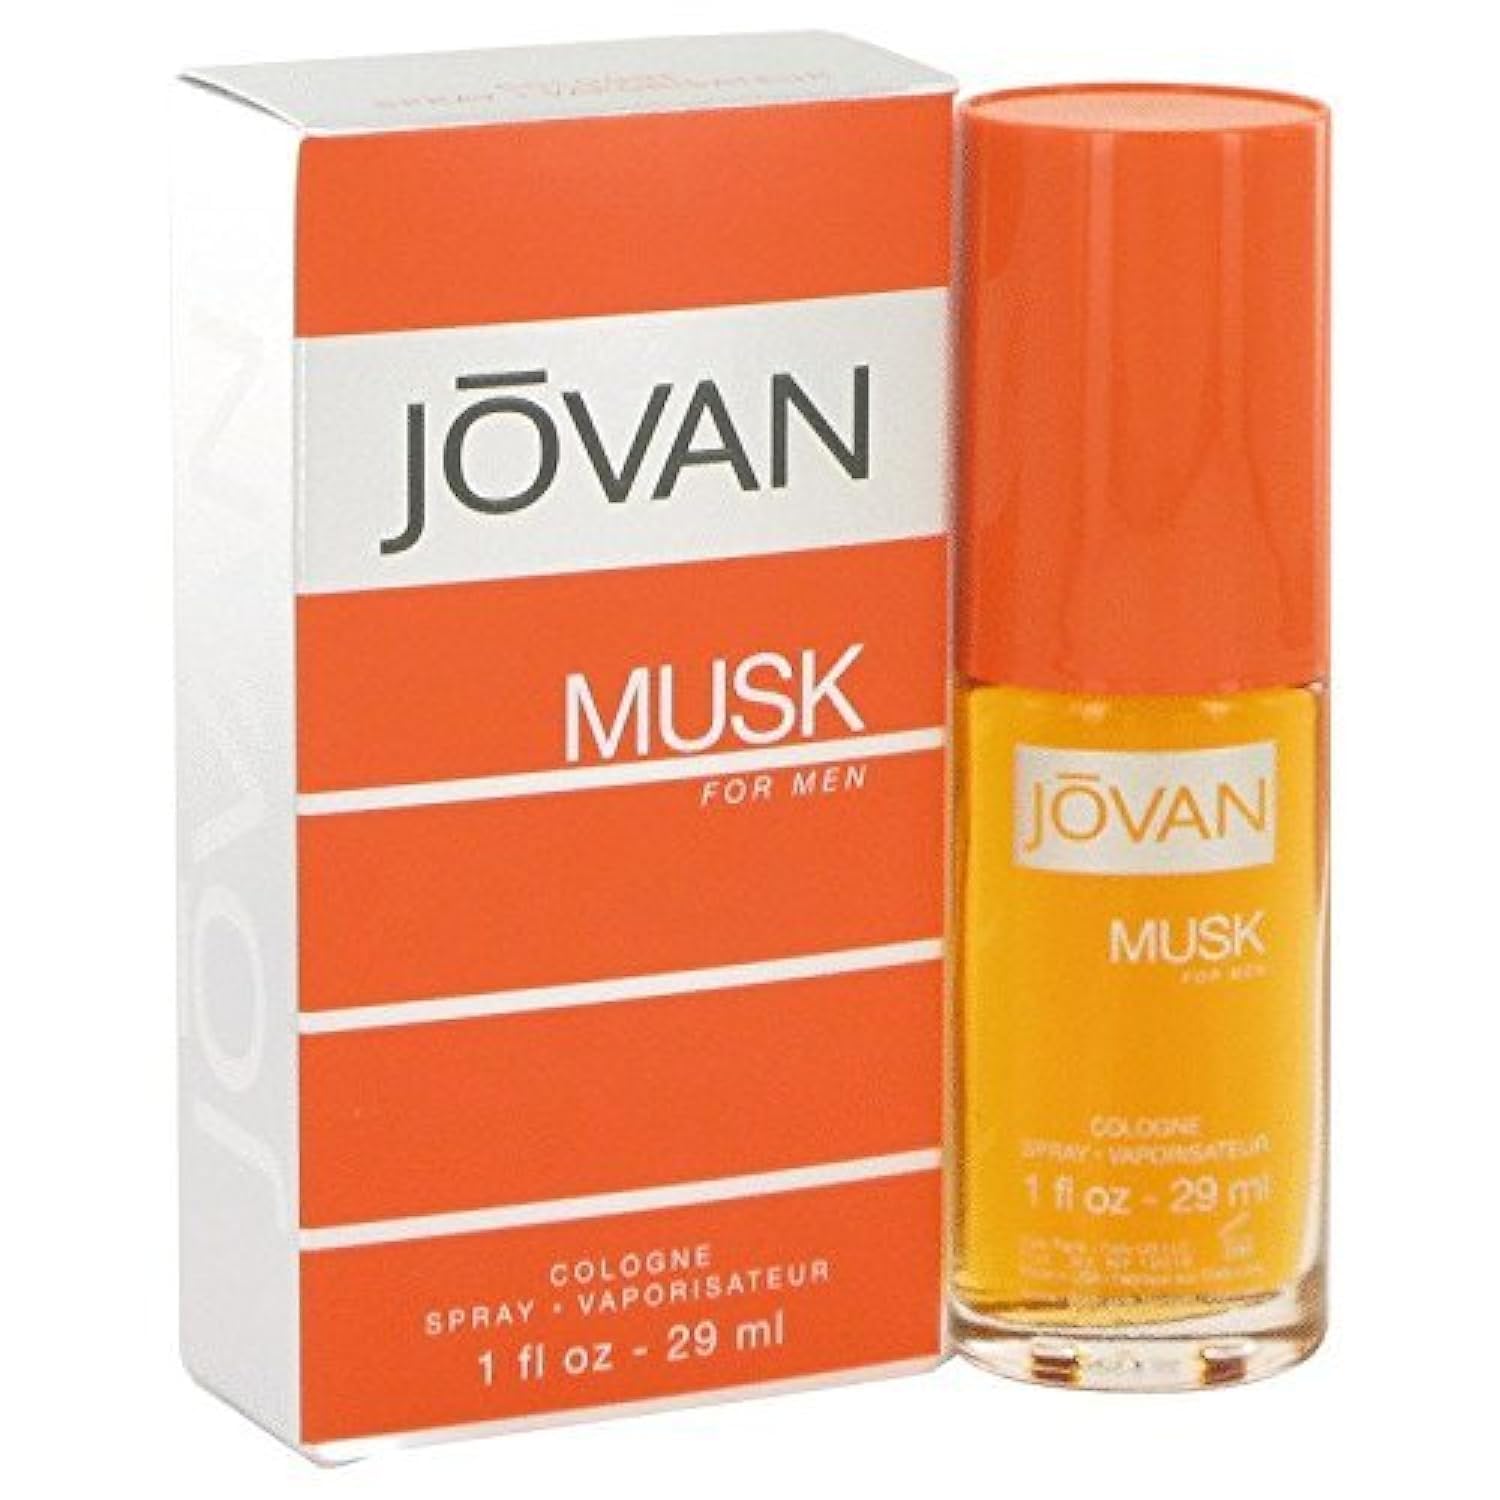 JOVAN MUSK by Jovan Cologne Spray 1 oz Men by Jovan